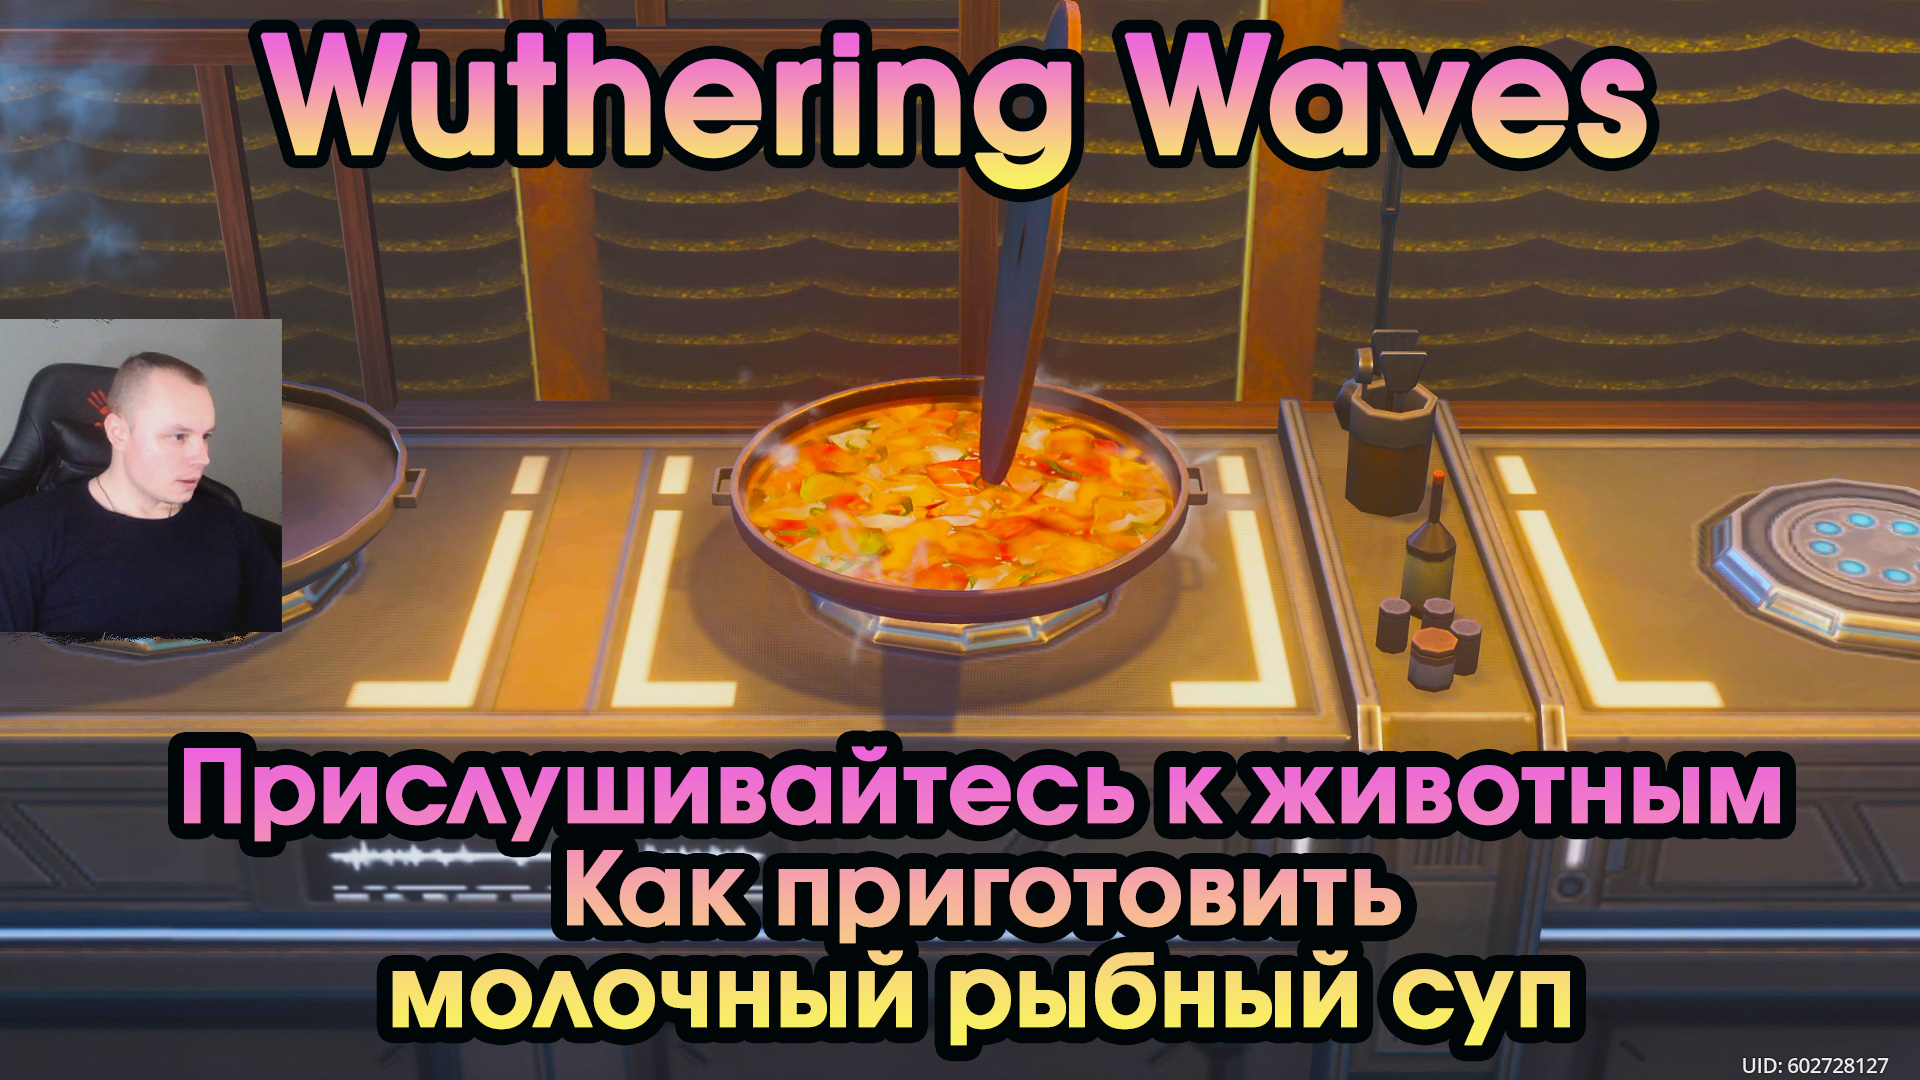 Wuthering Waves ➤ Как приготовить молочный рыбный суп ➤ Listen to Animals' ➤ Вузеринг вейвс ➤ WuWa